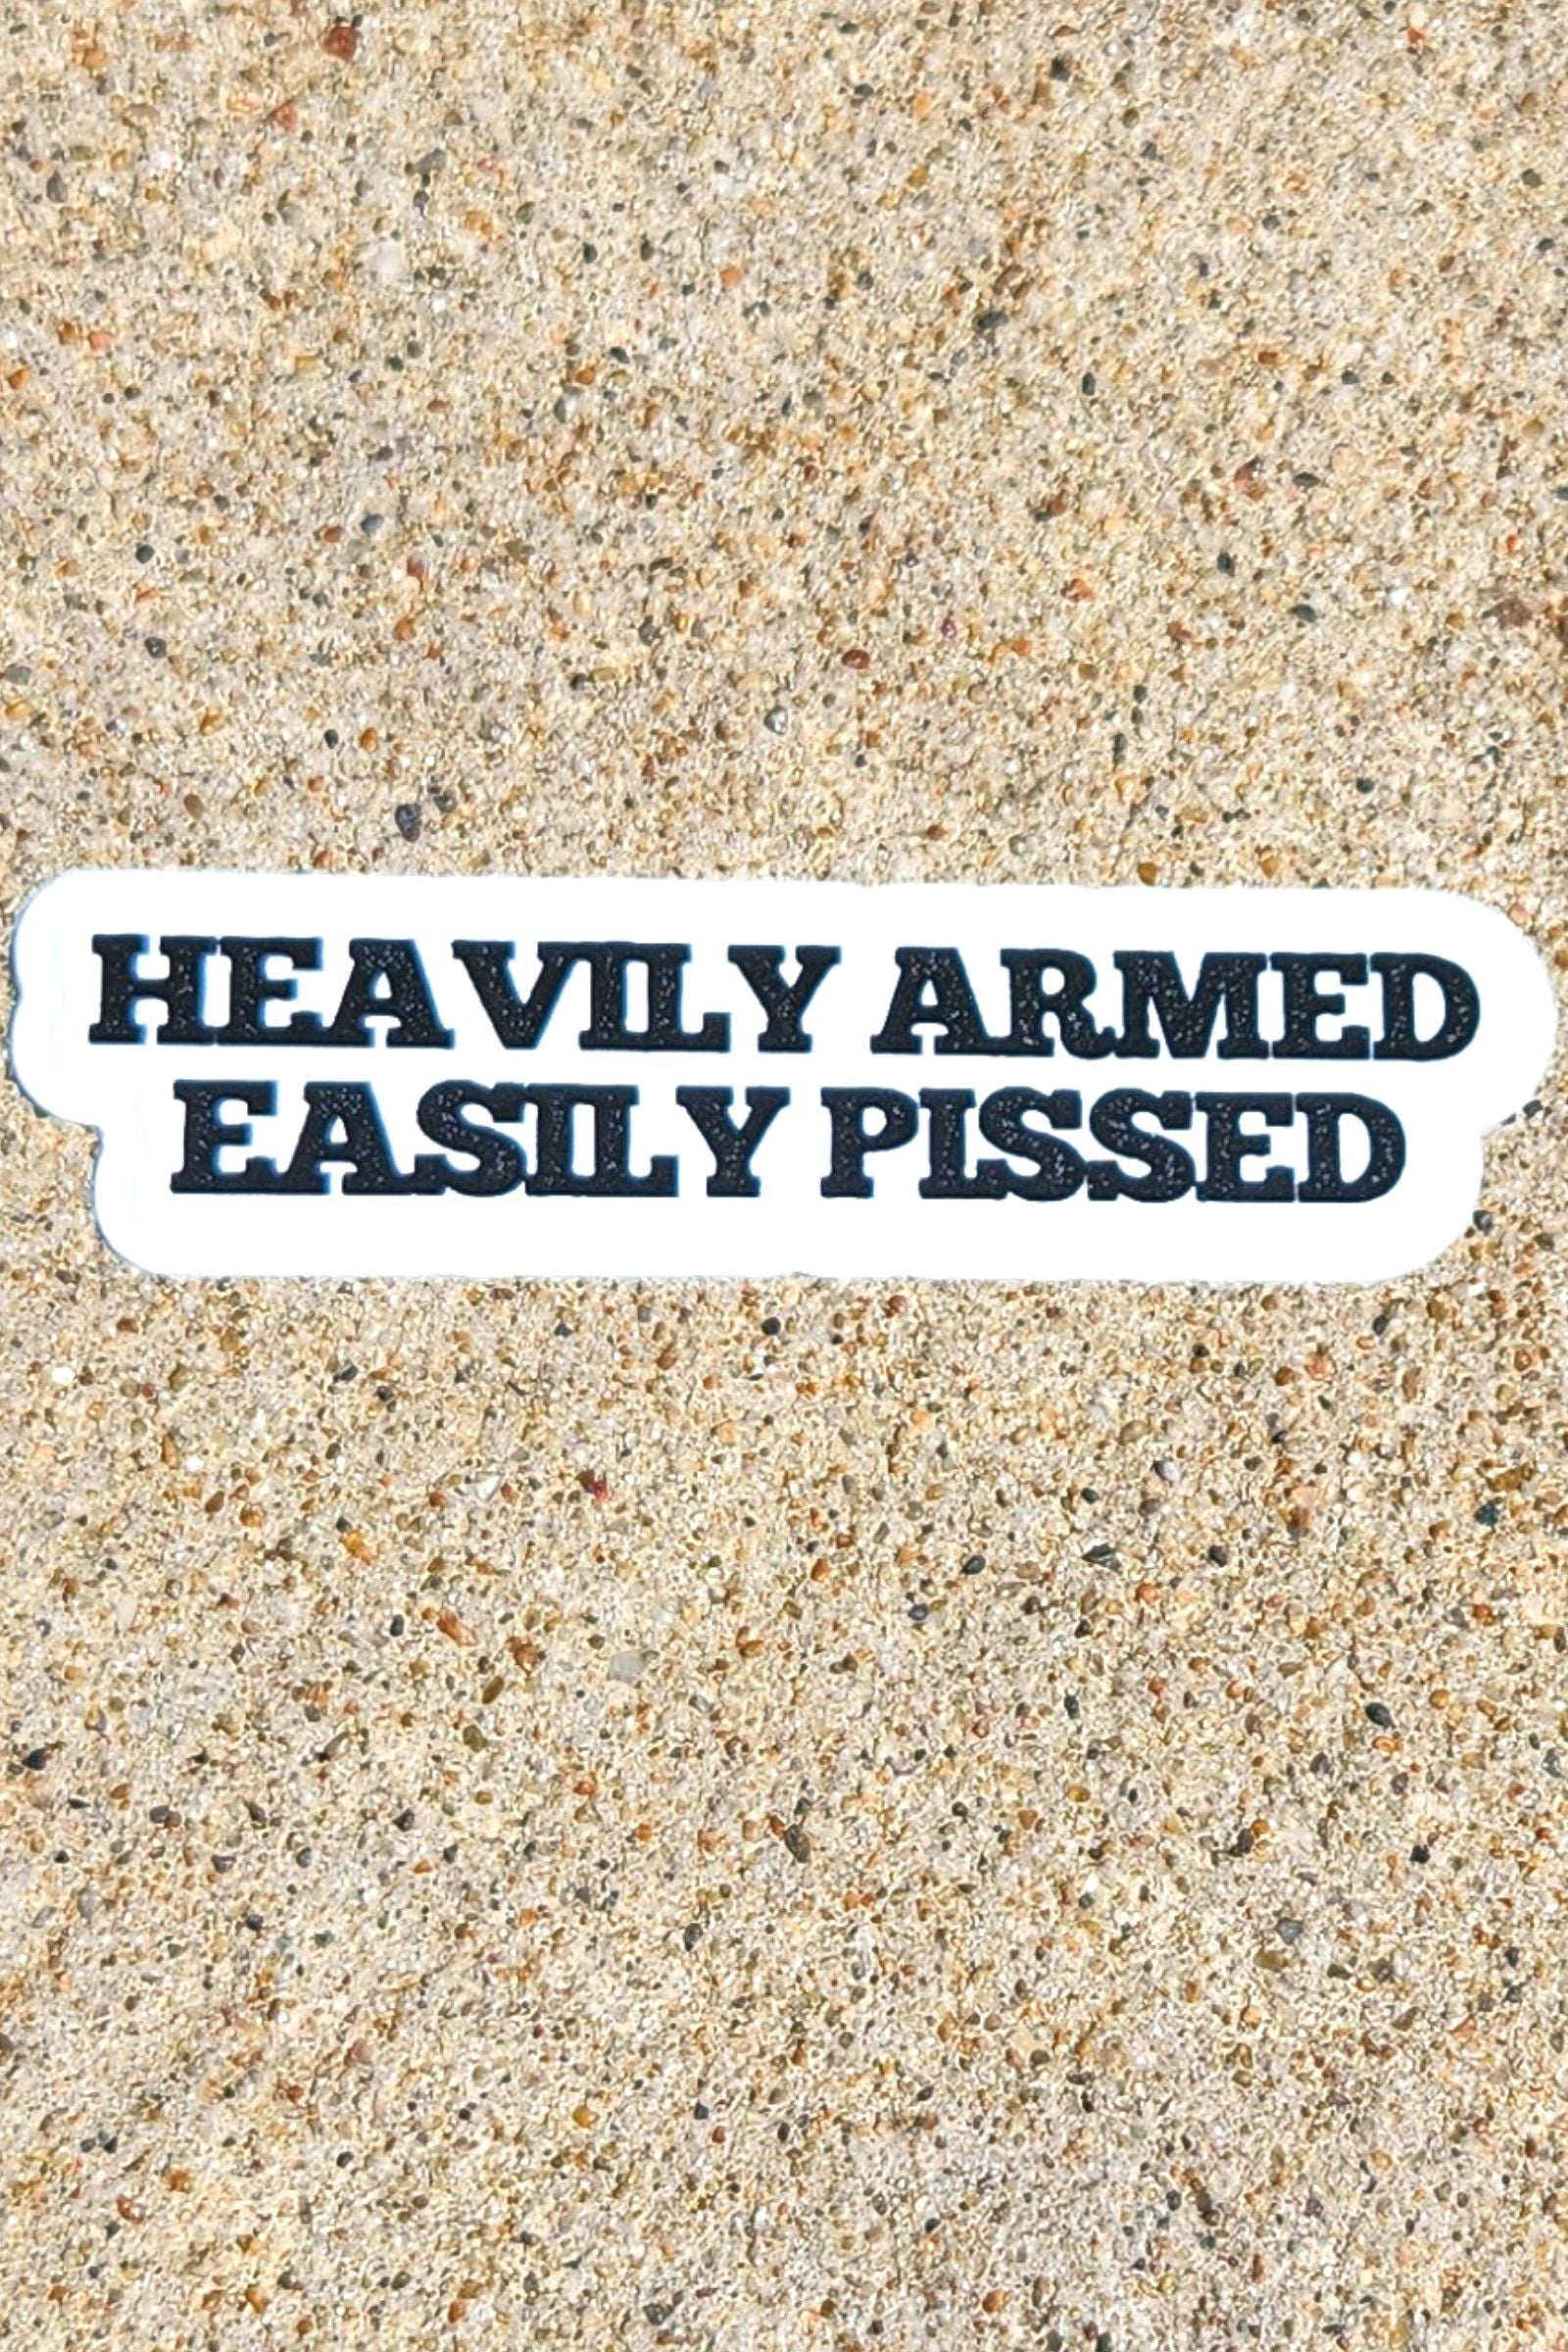 Heavily Armed & Easily Pissed Sticker